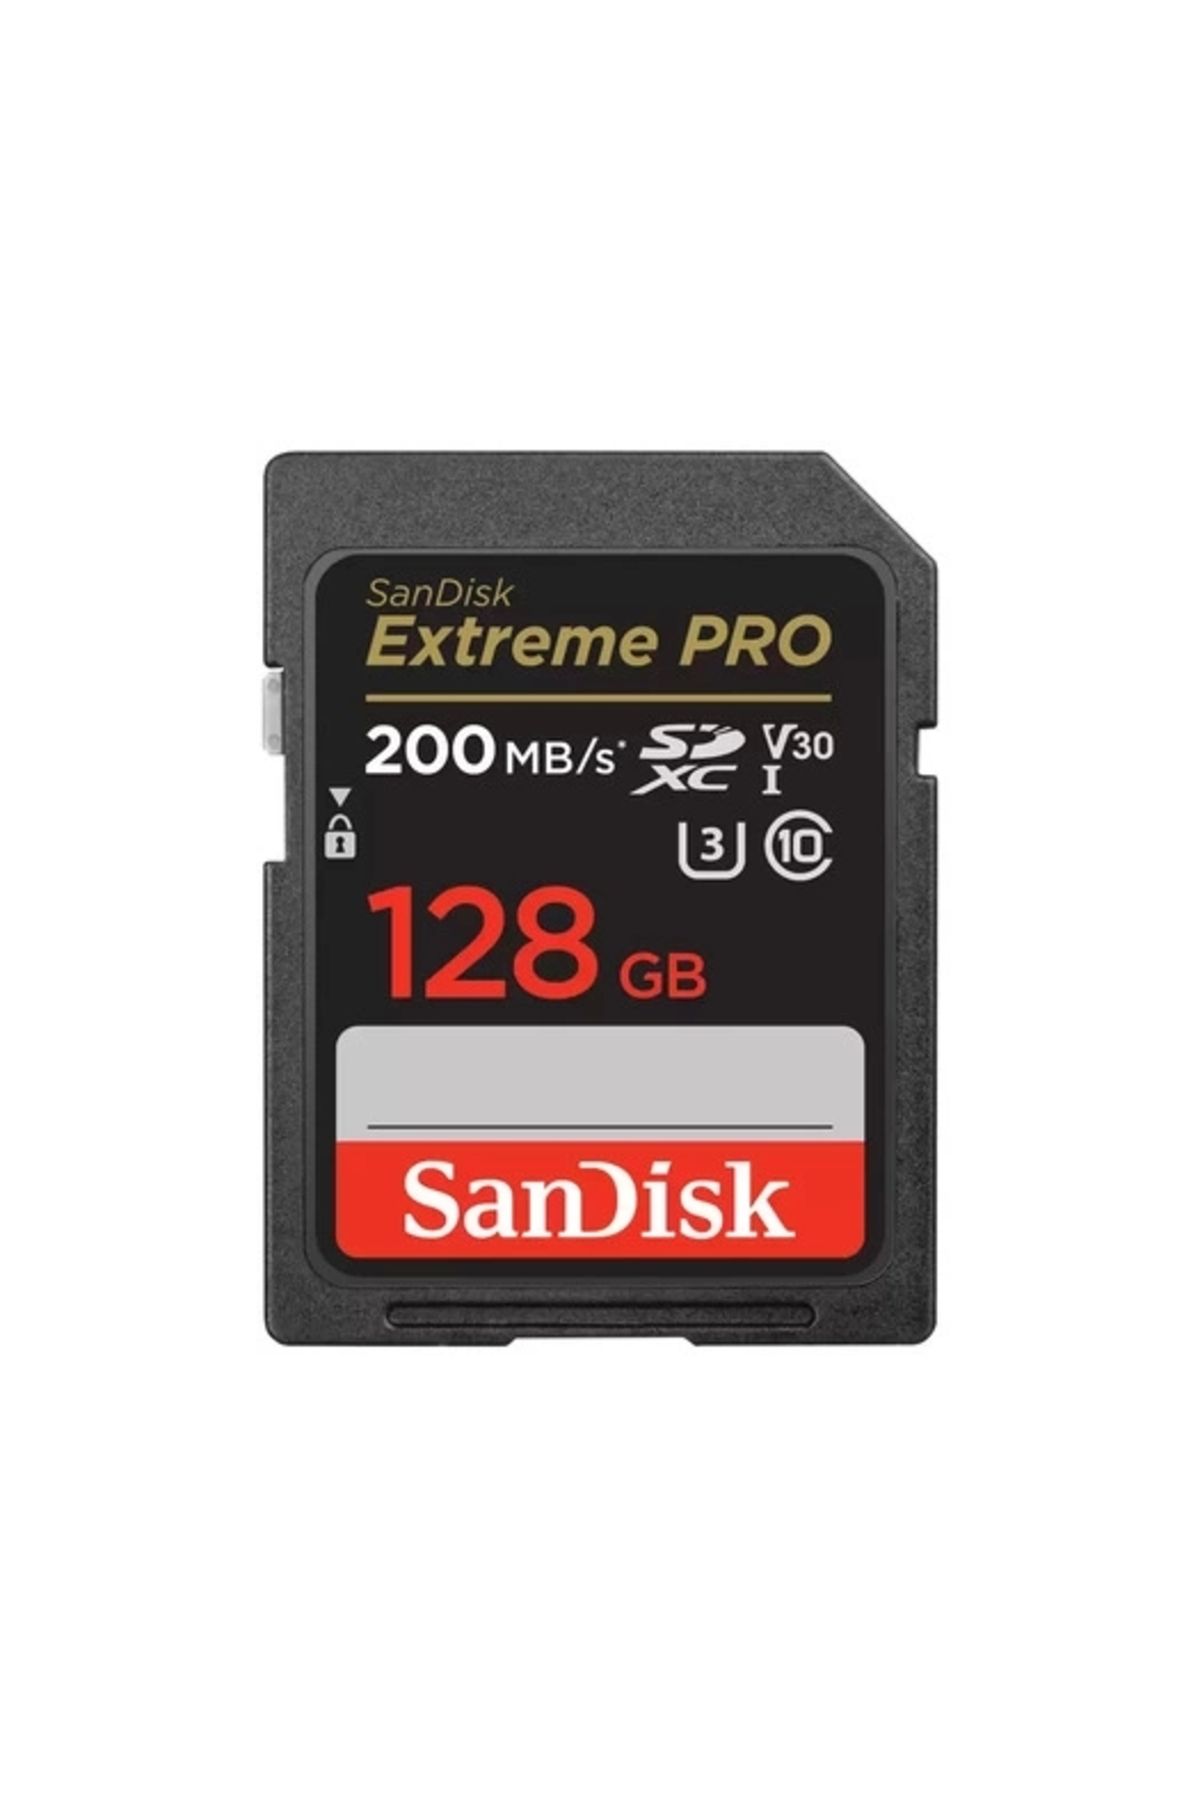 Sandisk Extreme Pro SD UHS I 128GB Card